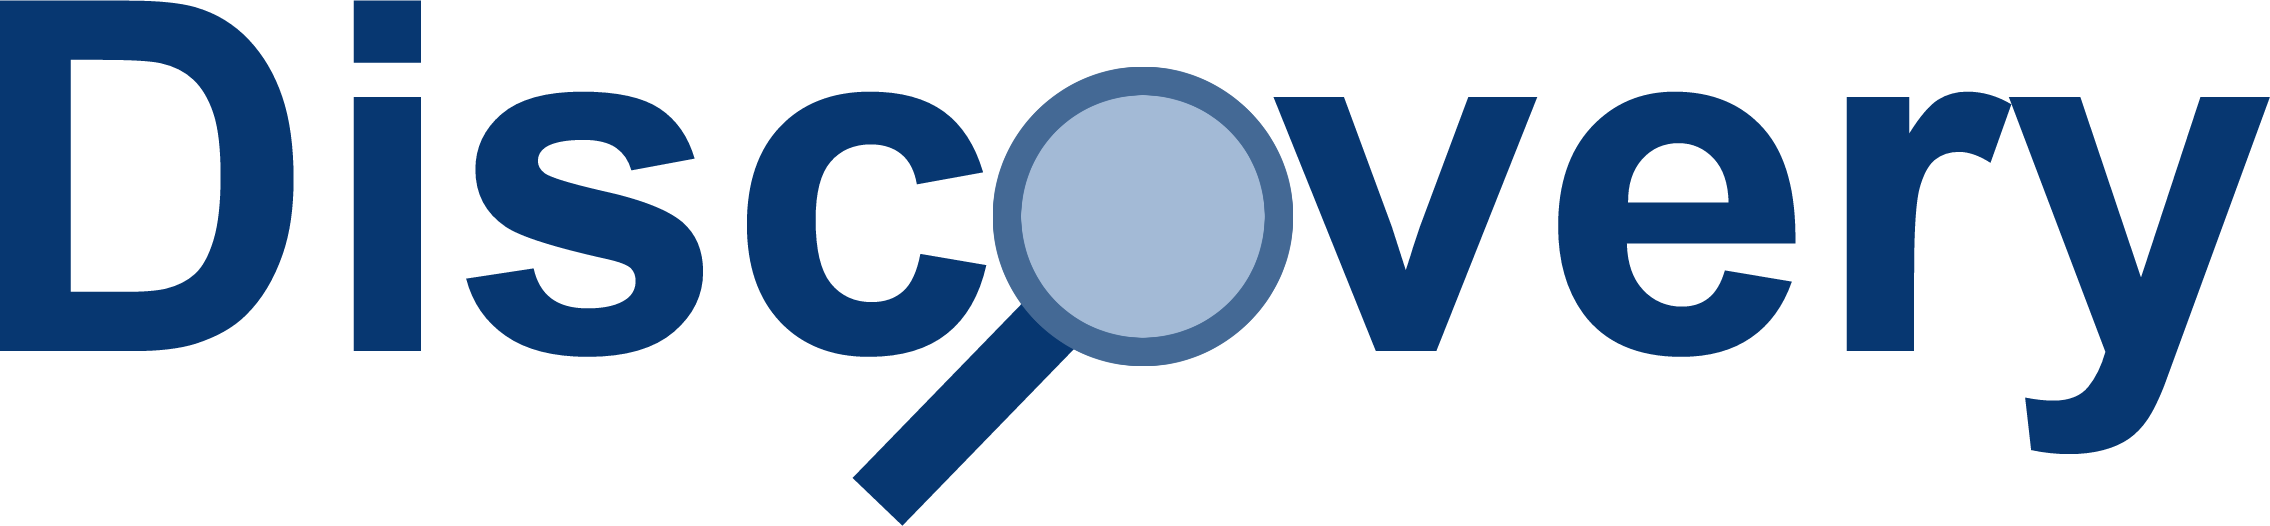 Discovery Logo